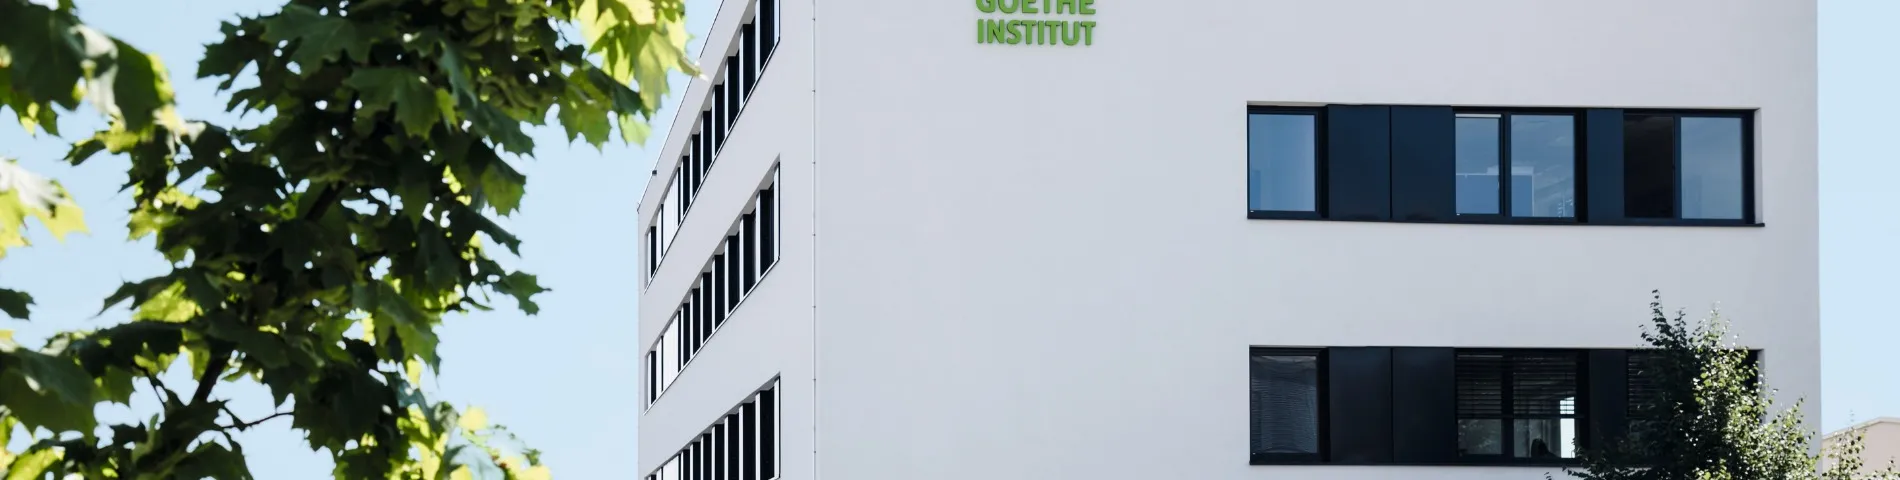 Goethe-Institut snímek 1	